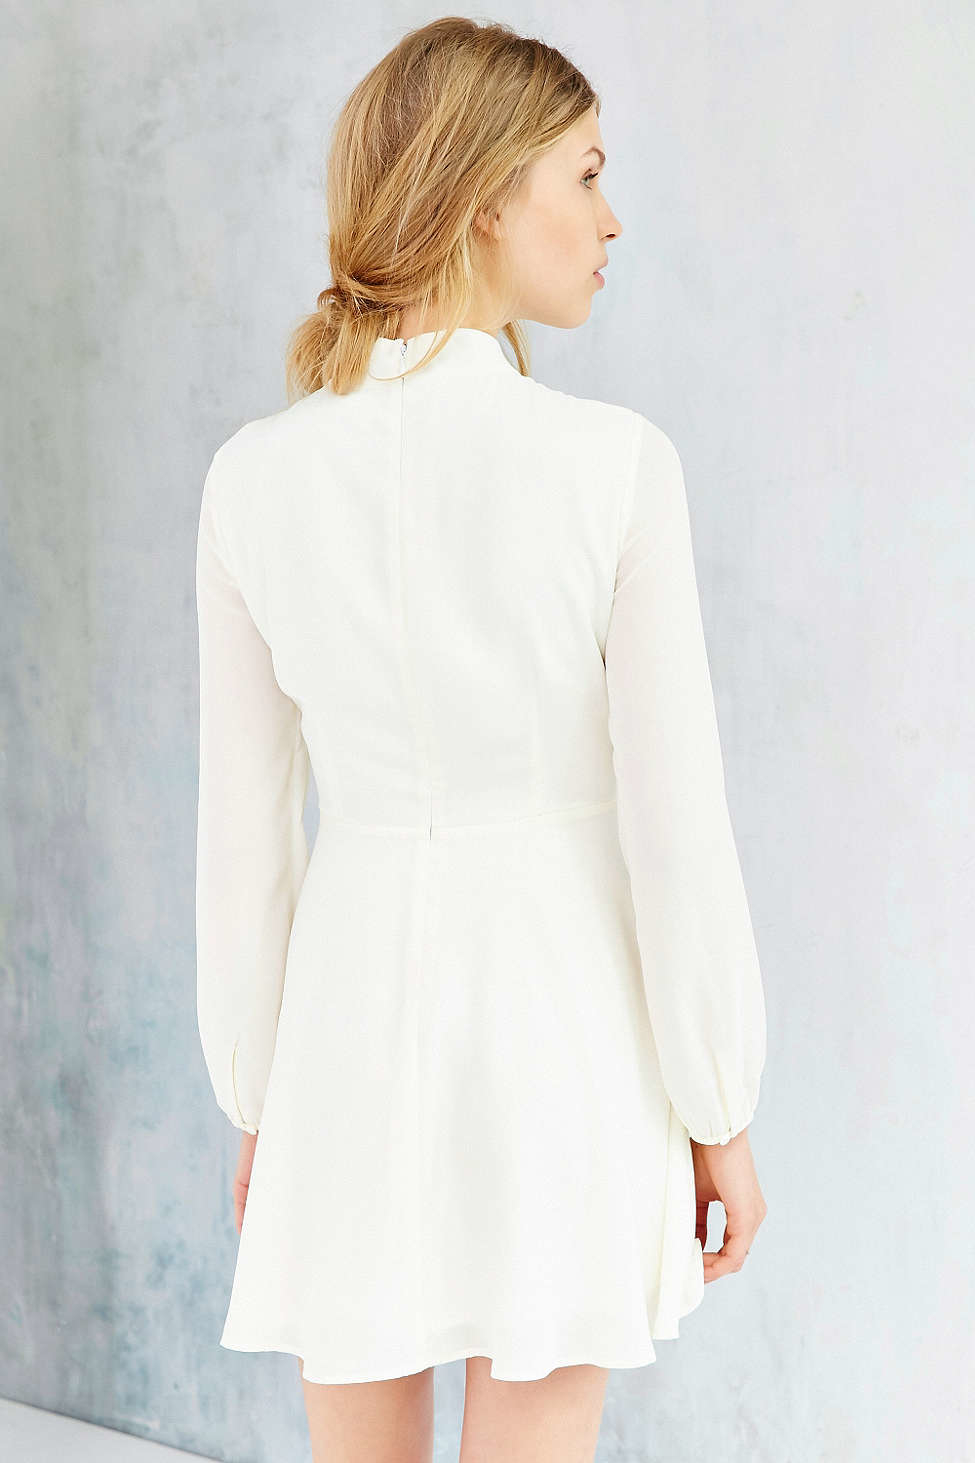 Download Lyst - Love Sadie Long-sleeve Mock-neck Dress in White